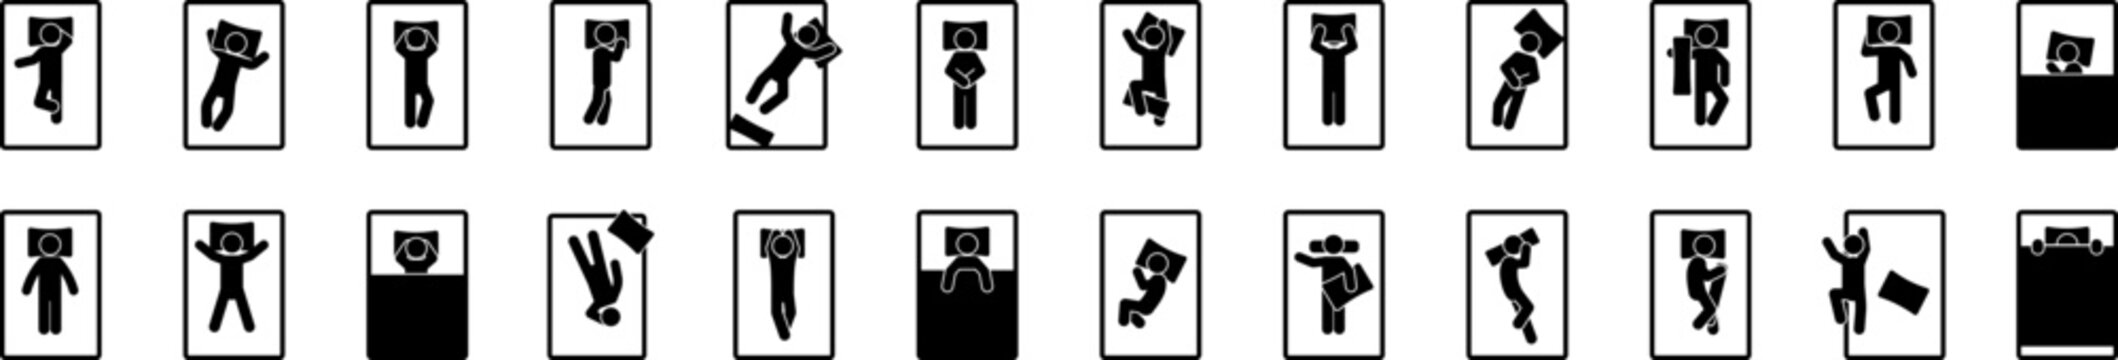 Sleeping position icon collections vector design